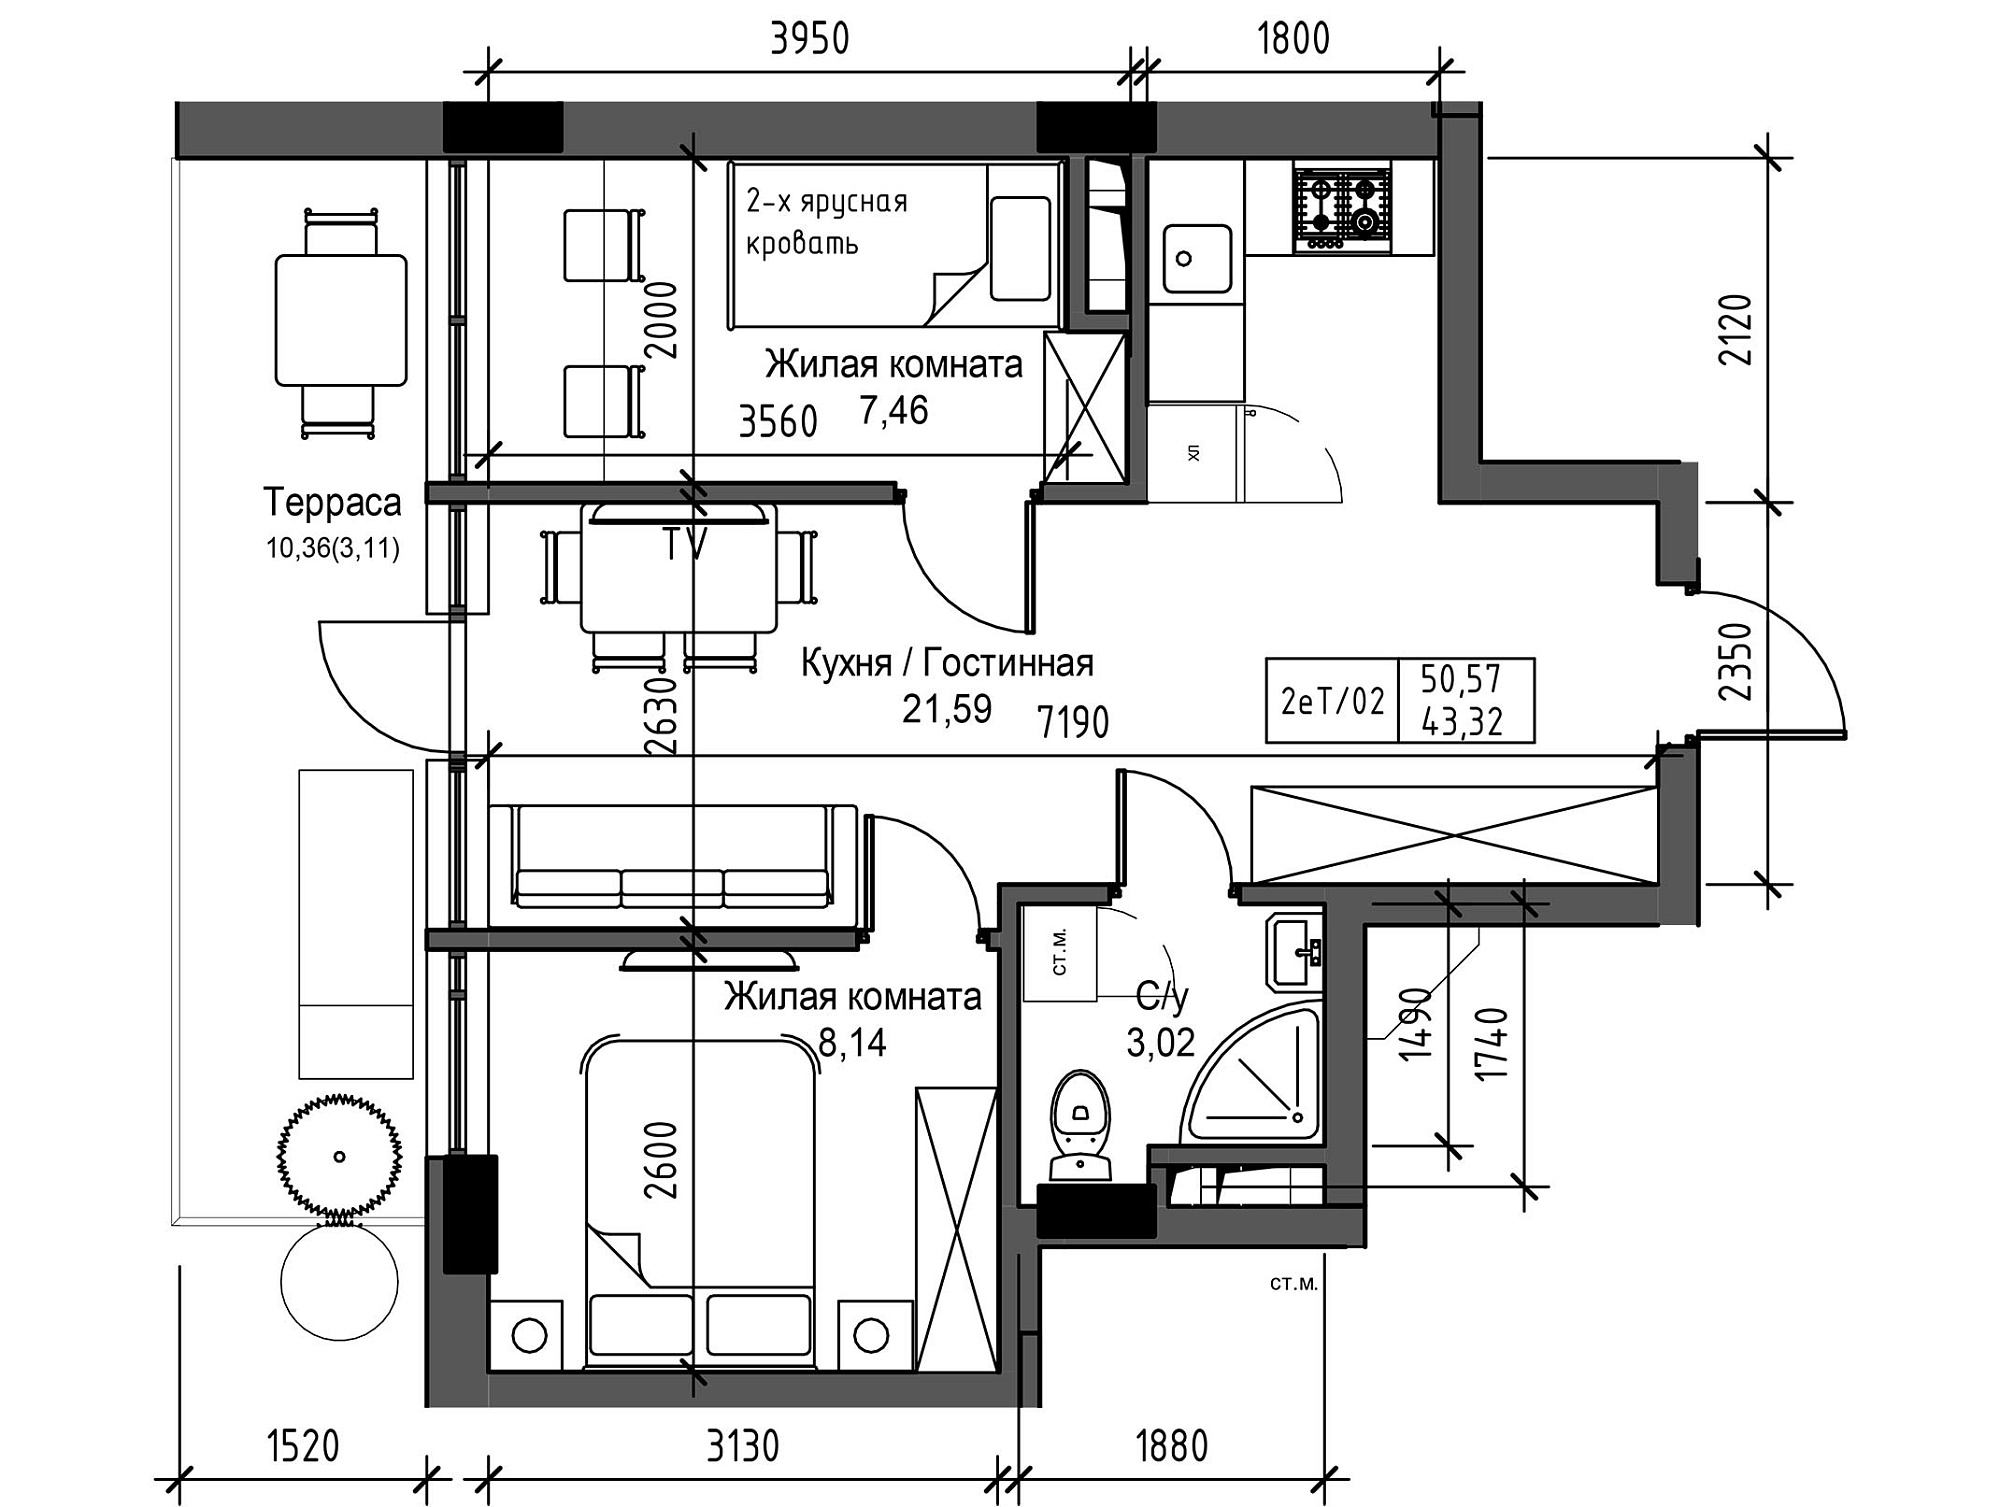 Planning 2-rm flats area 43.32m2, UM-003-09/0098.